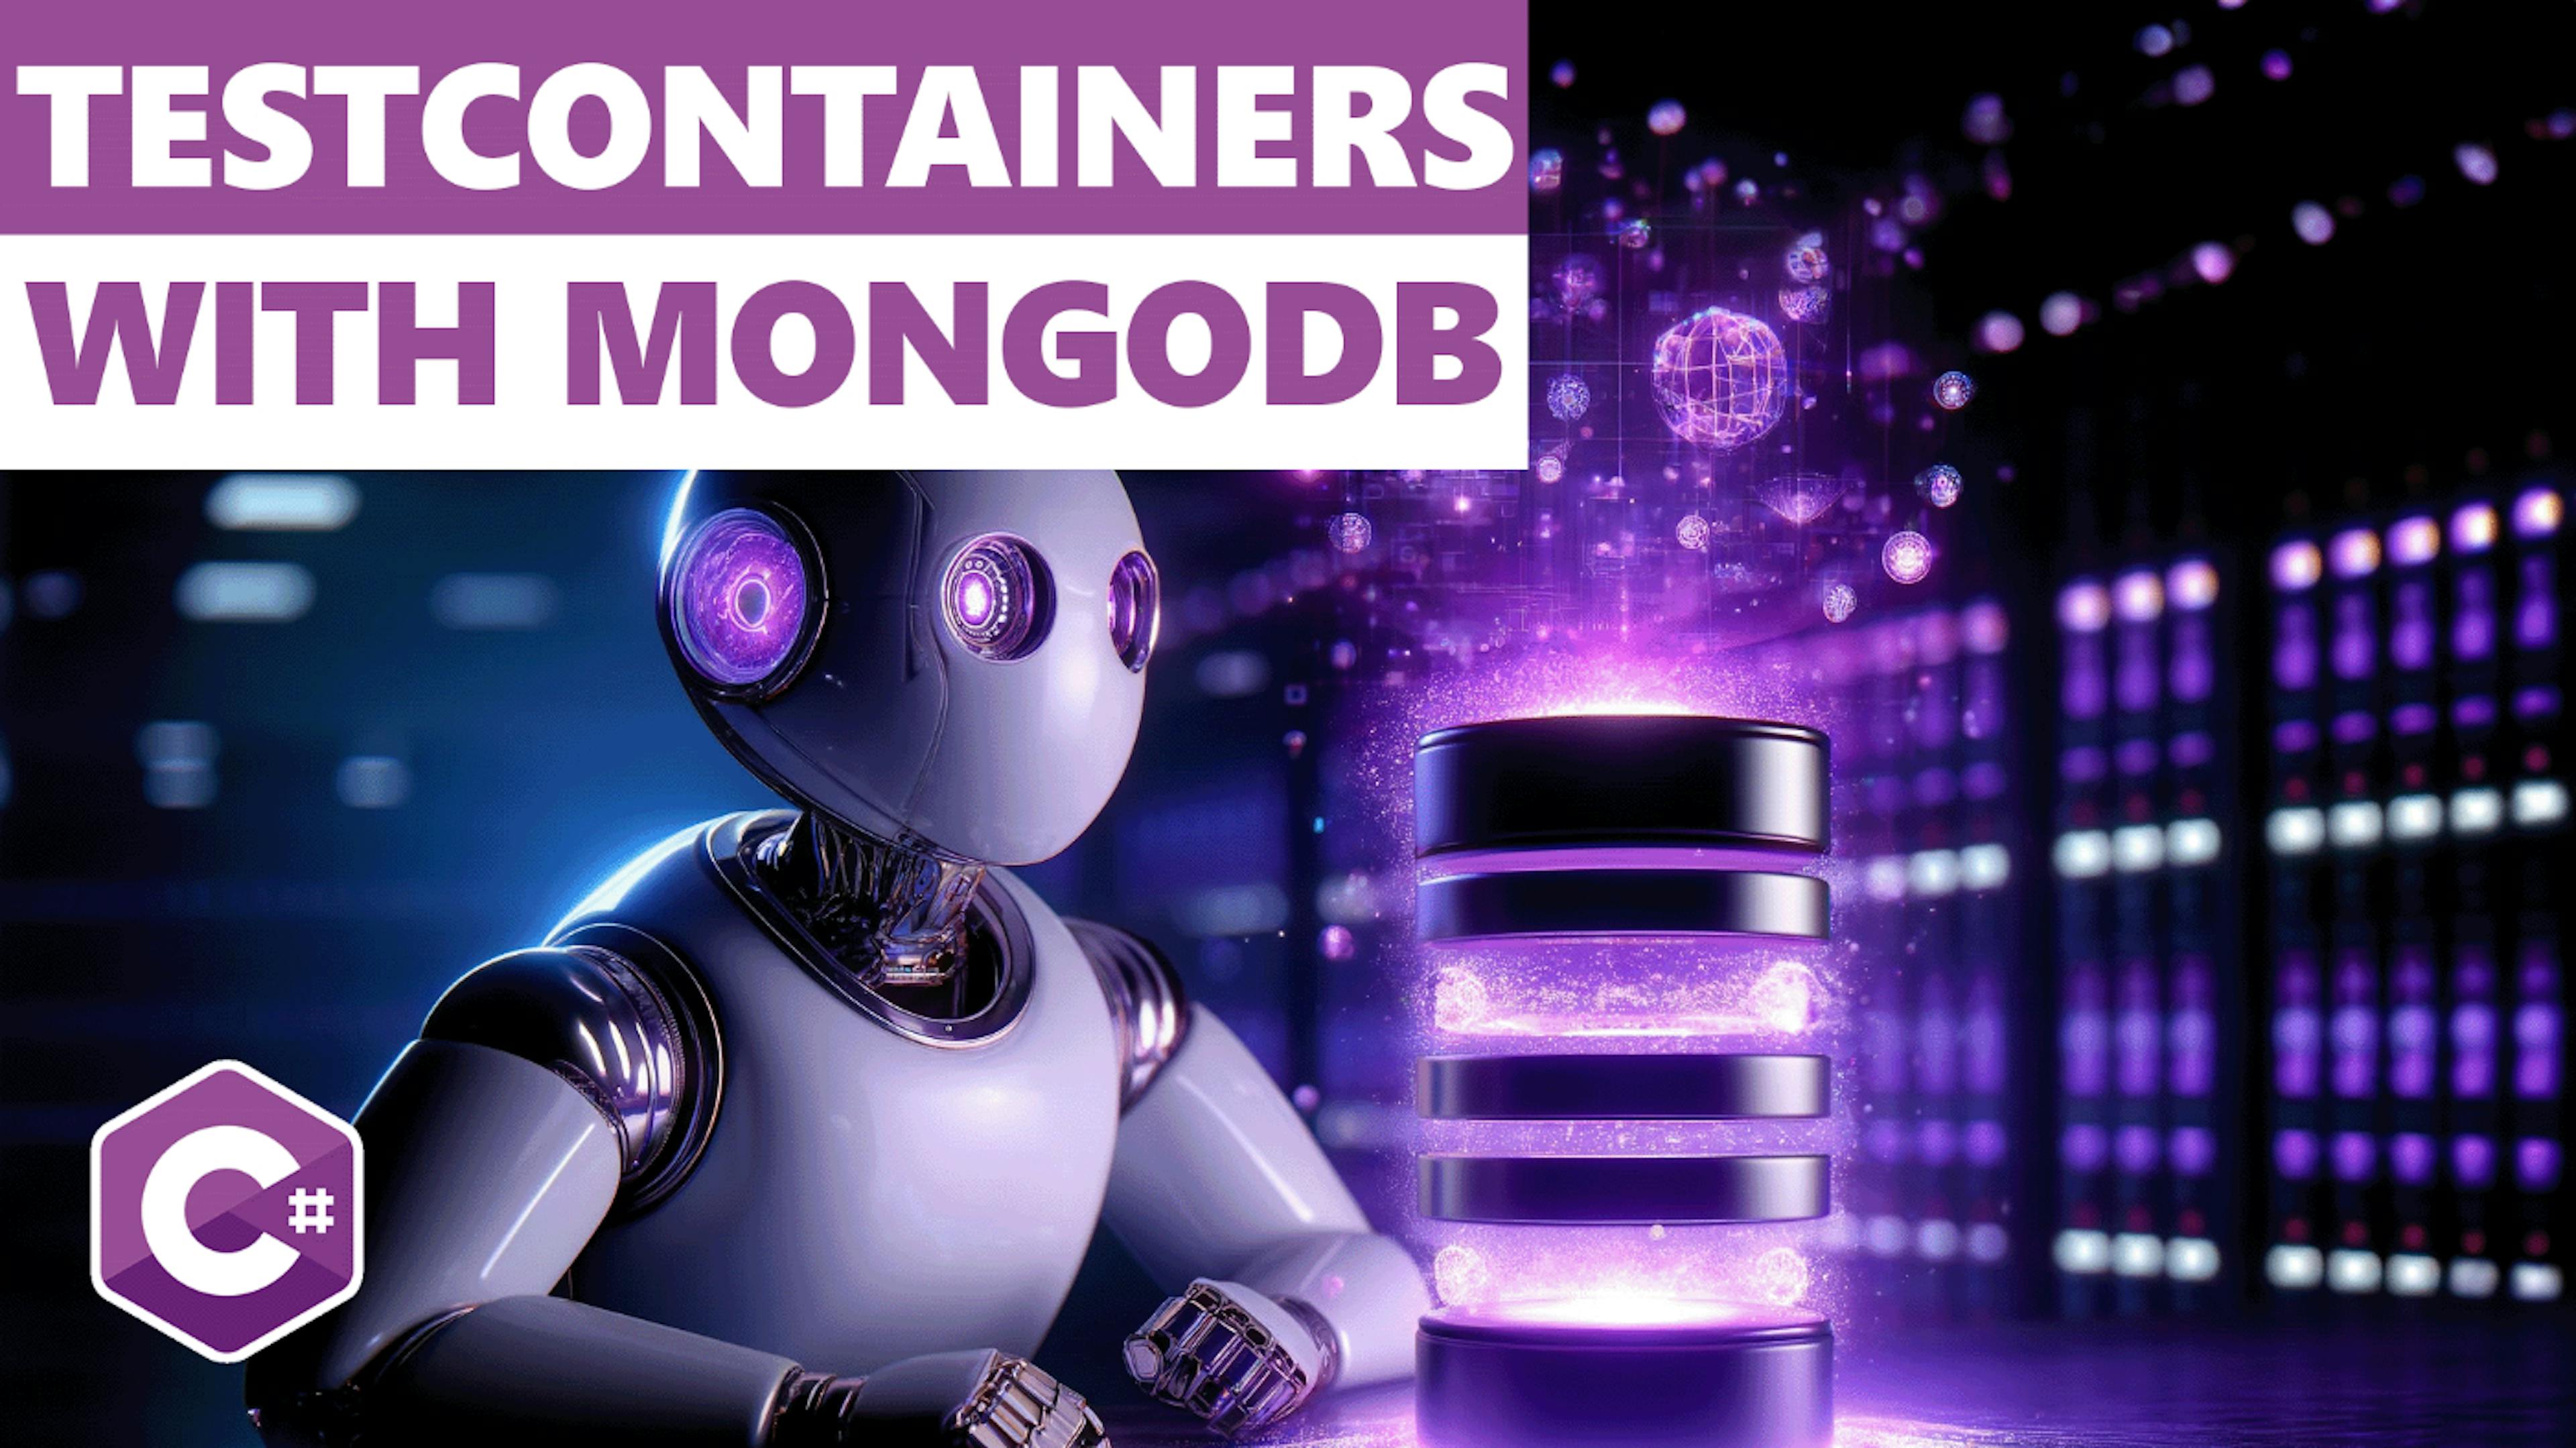 featured image - 使用 MongoDB 的 C# 测试容器轻松运行本地数据库